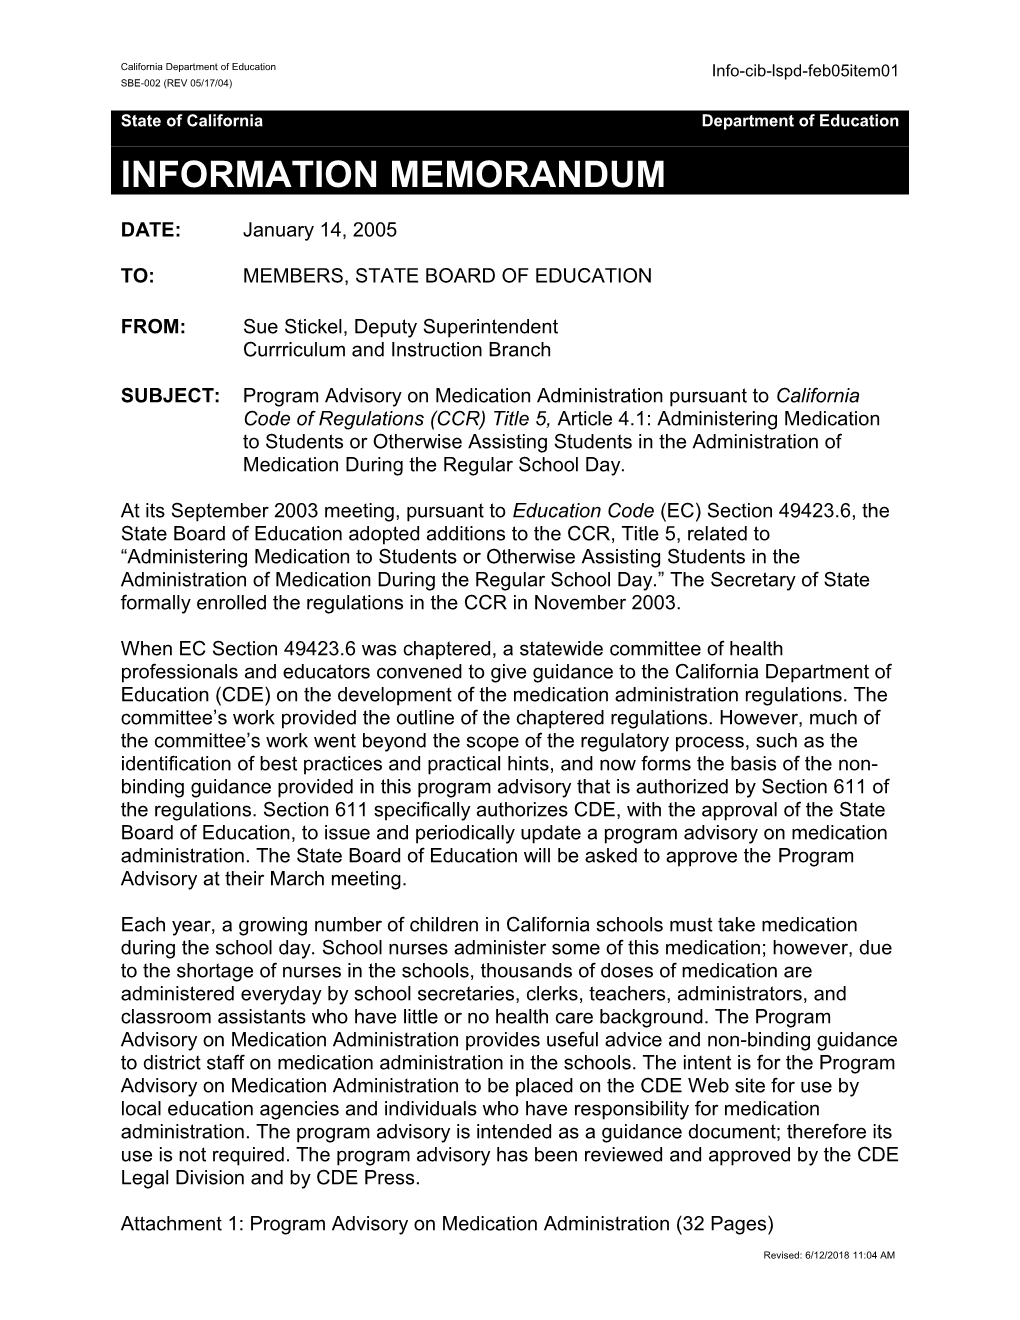 February 2005 LSPD Item 1 - Information Memorandum (CA State Board of Education)